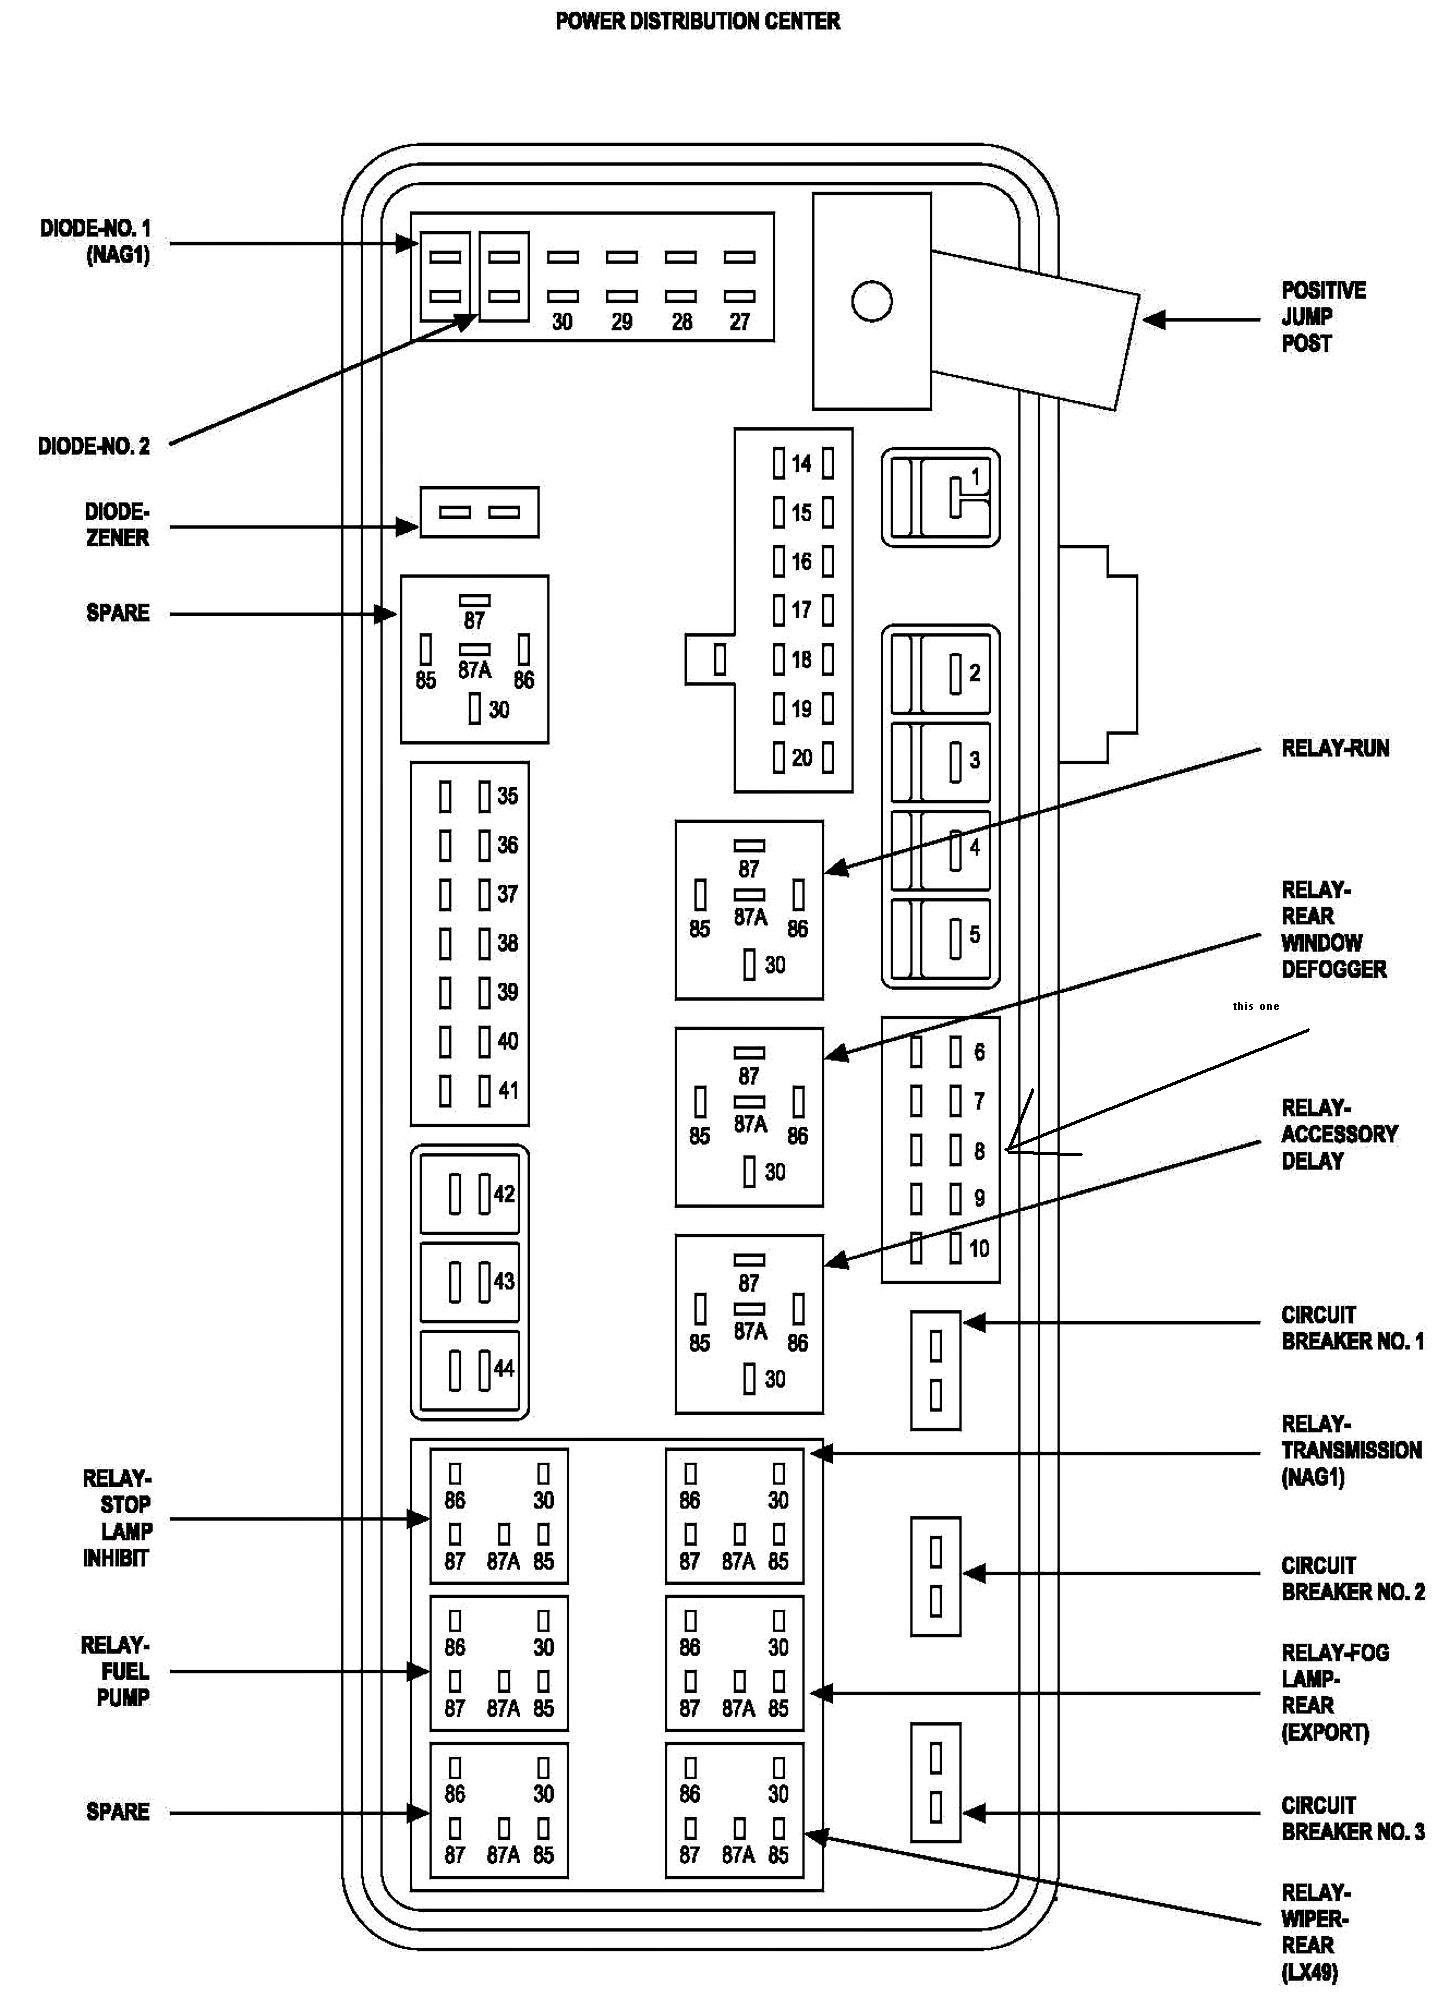 Wiring Diagram Info: 34 2012 Dodge Journey Fuse Box Diagram